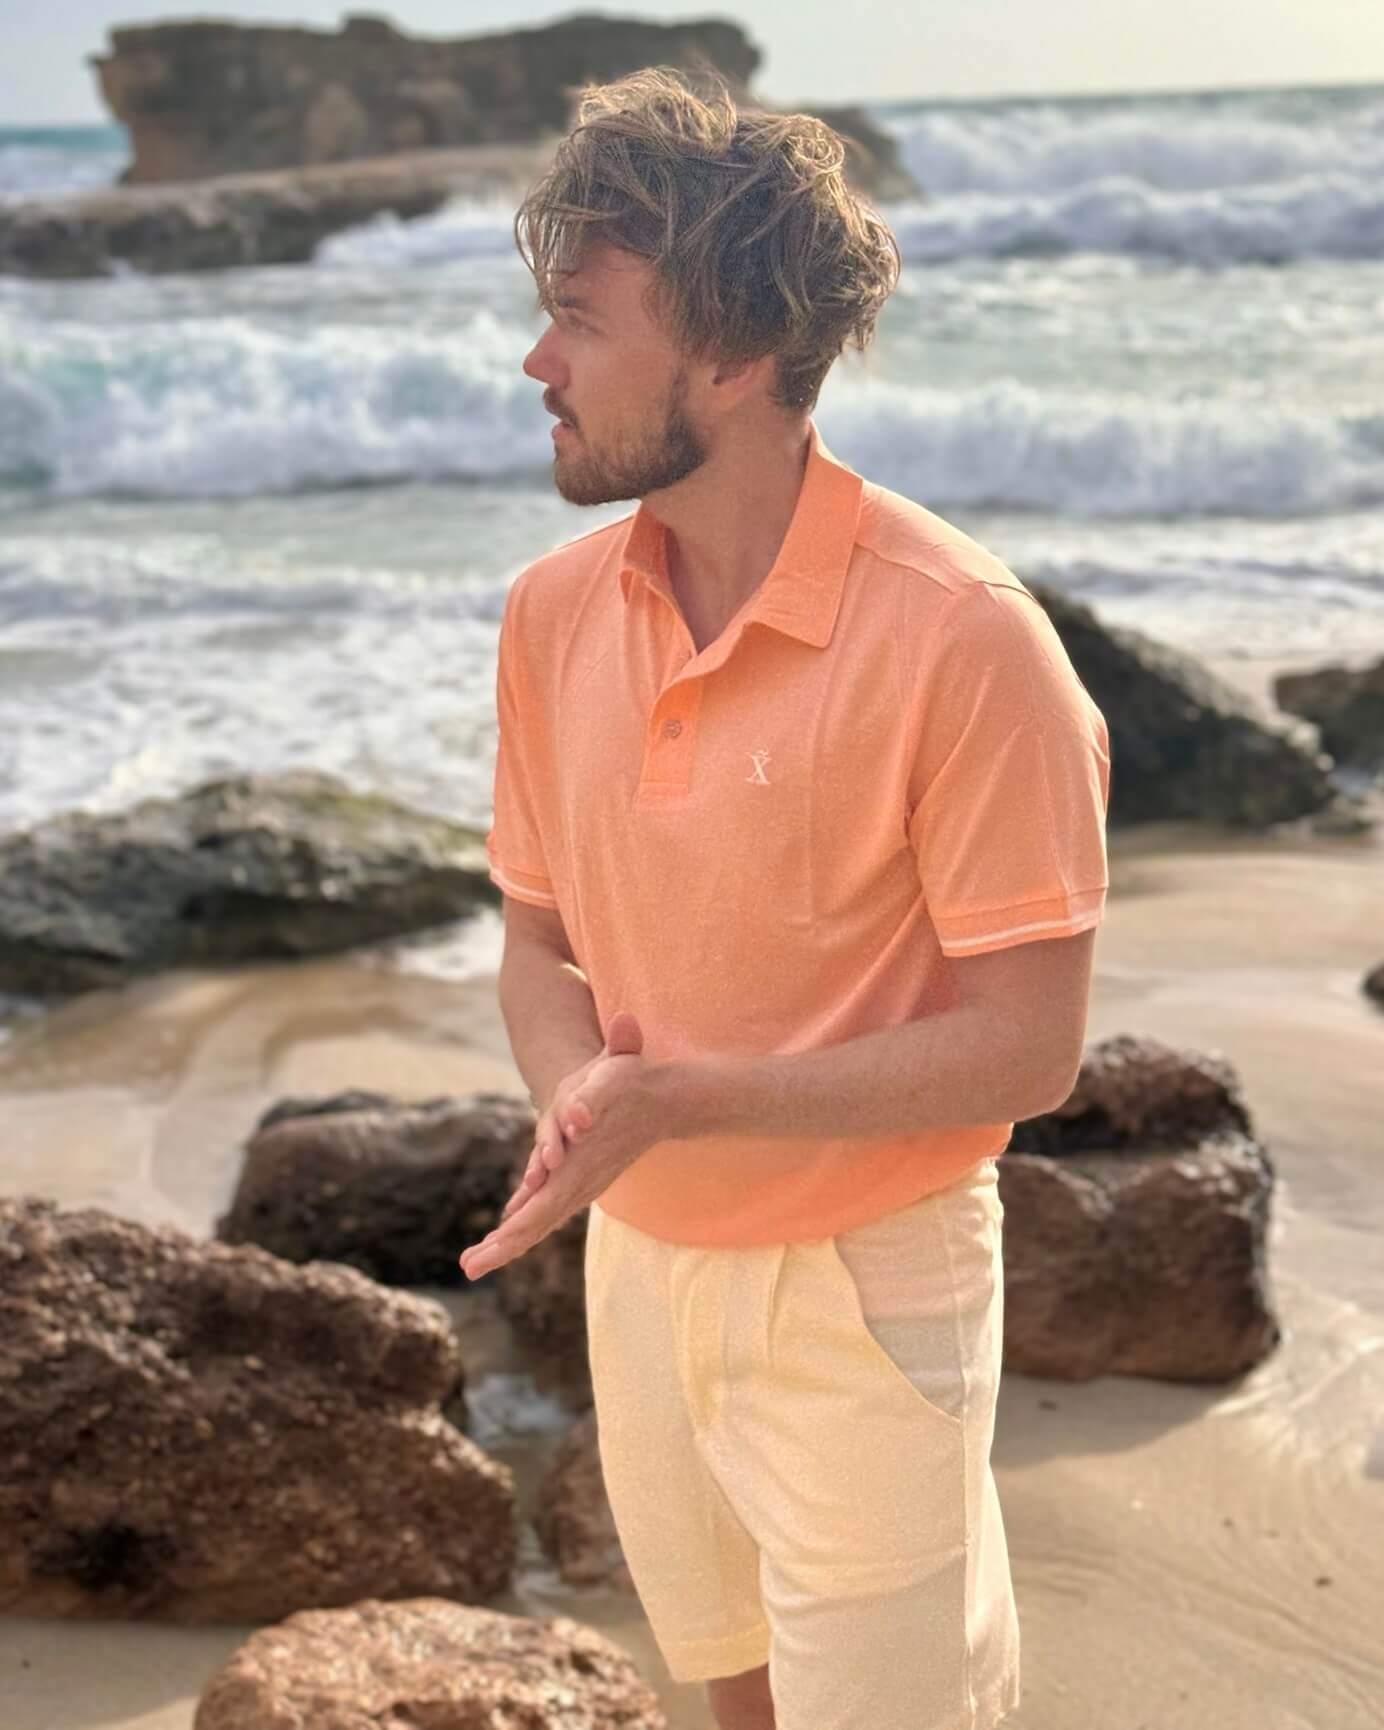 Peach Nature Polo | Men's golf polo shirt made from TENCEL™